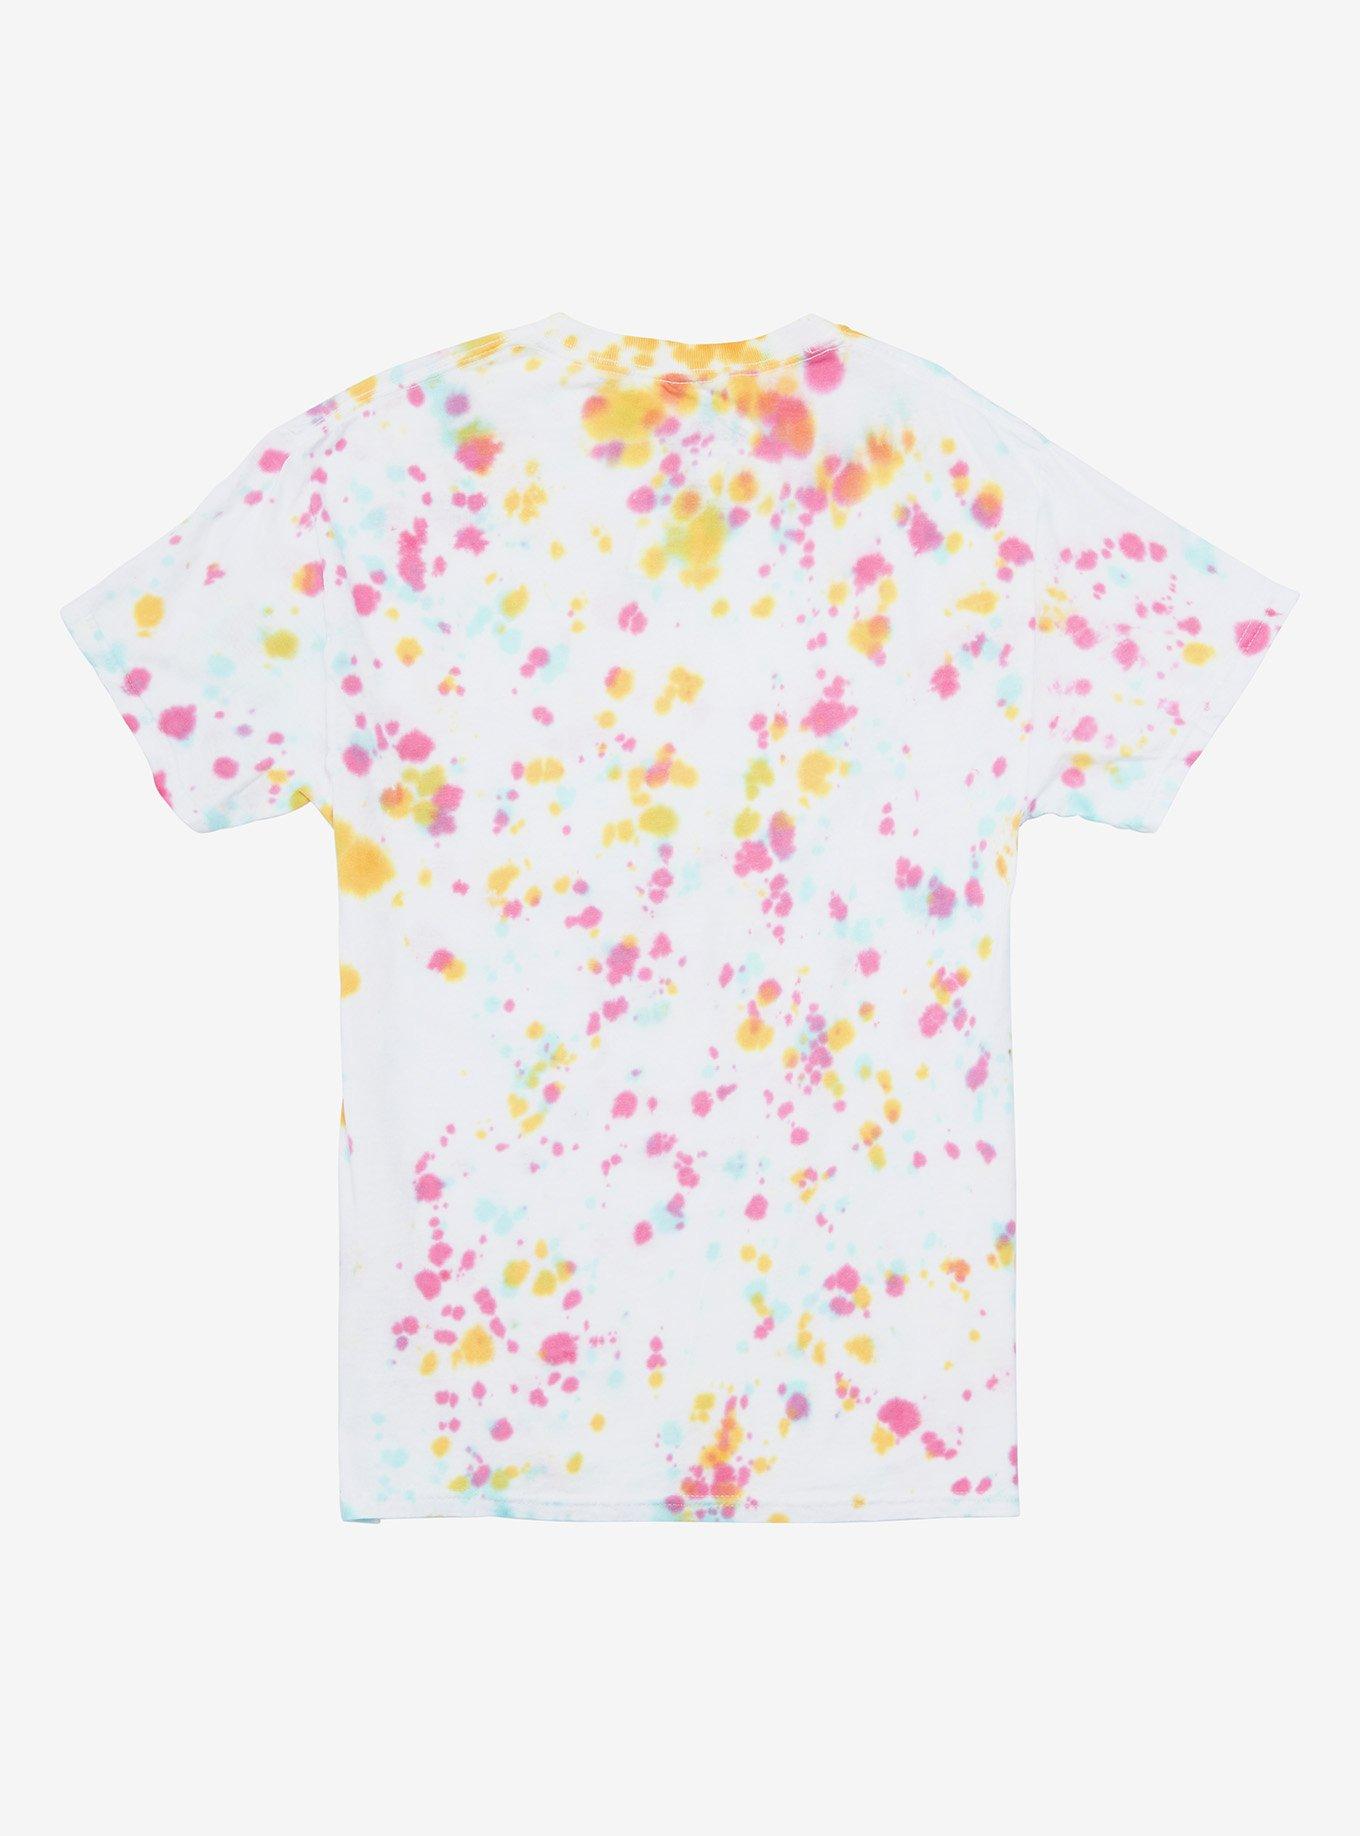 Pop-Tarts Sprinkles Tie-Dye T-Shirt, MULTI, alternate